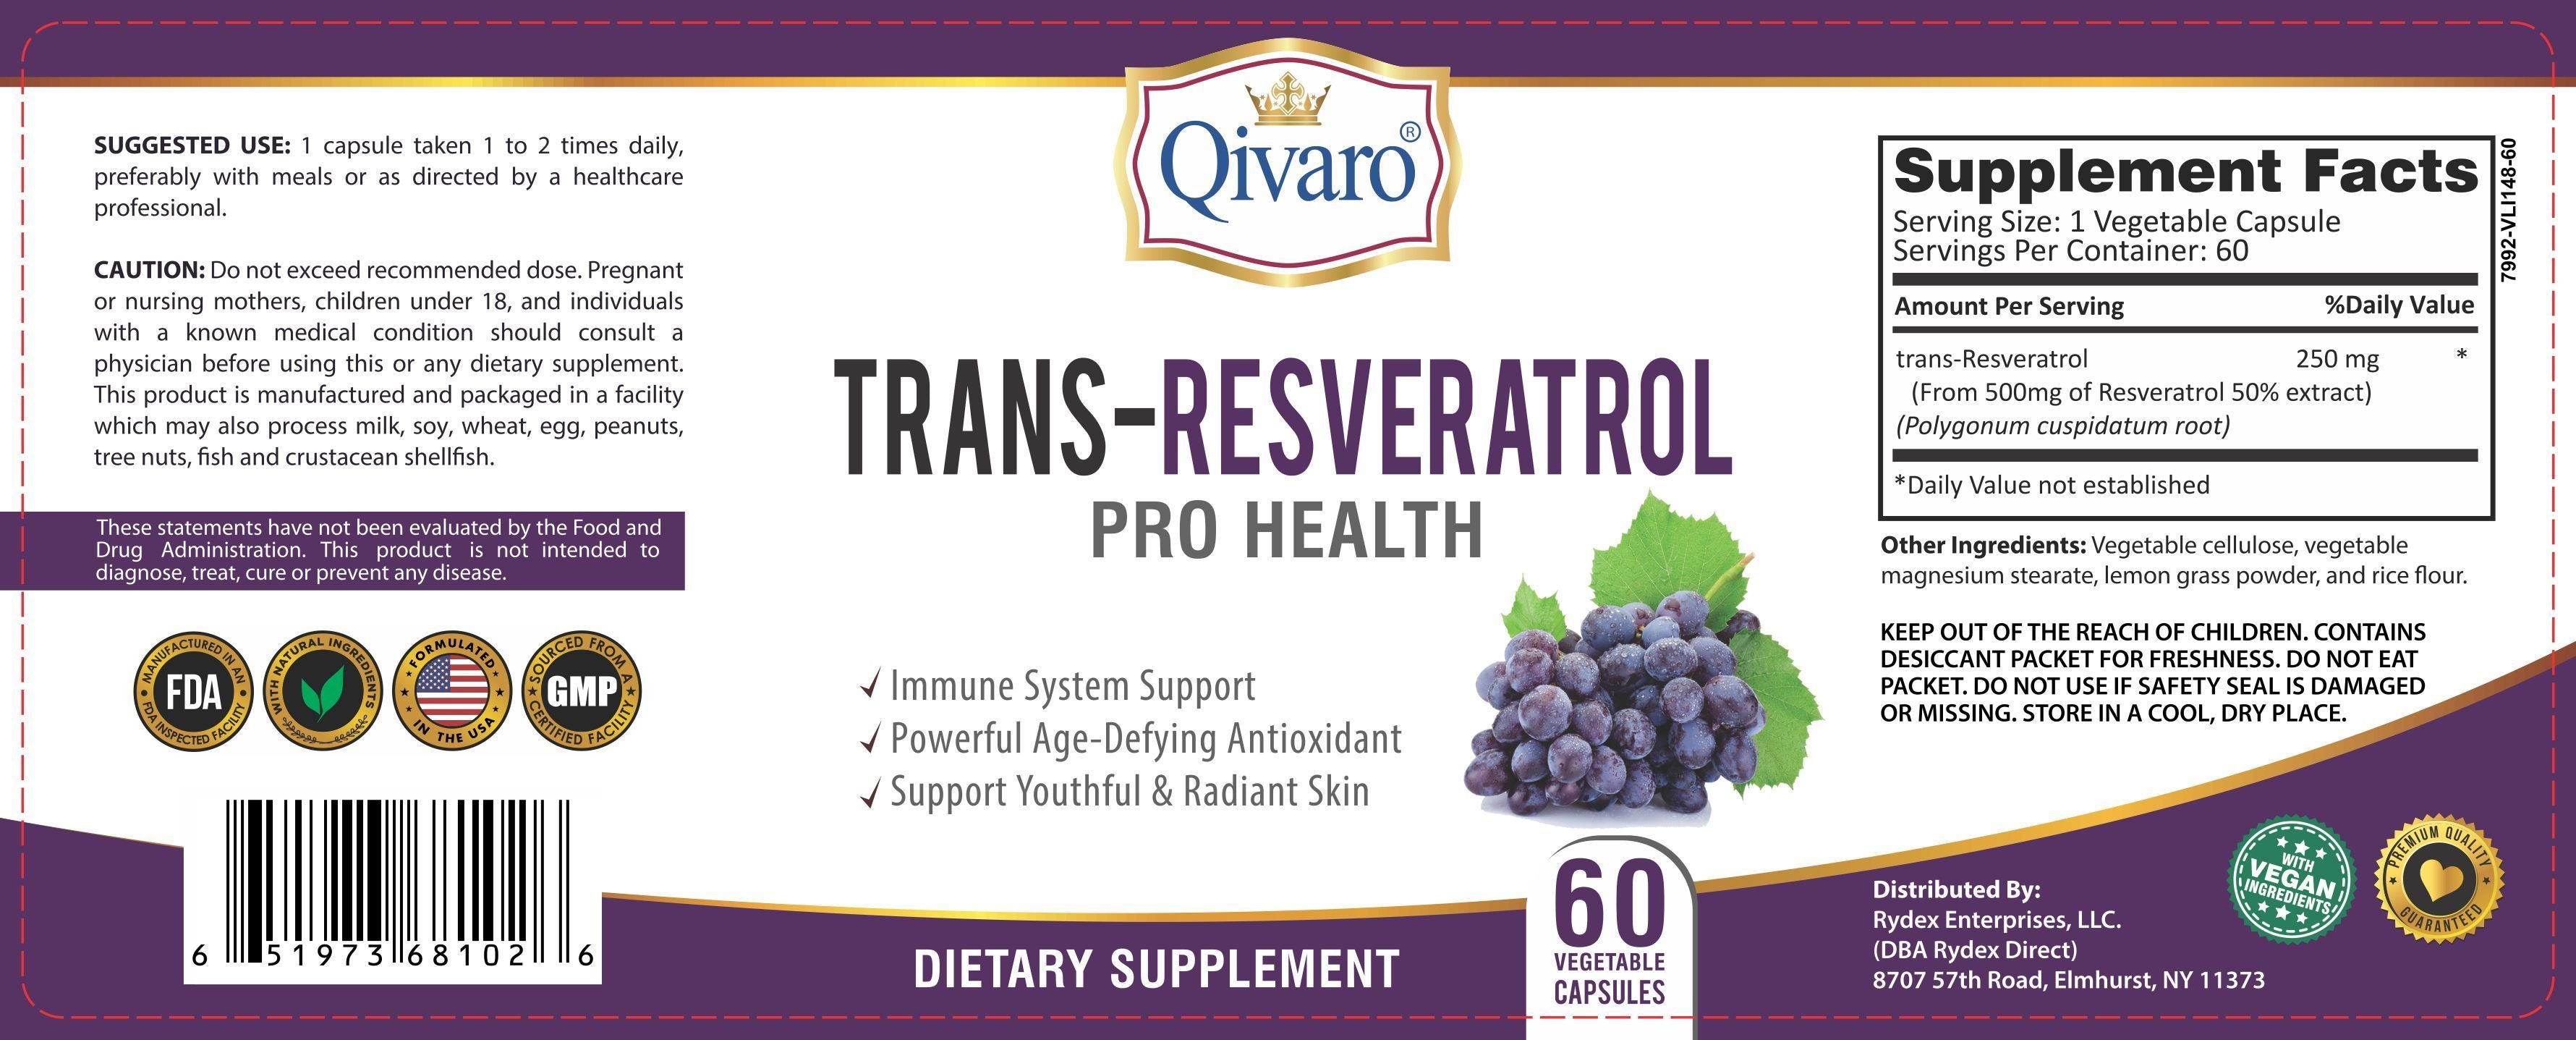 SKU: QIH06: Trans-Resveratrol Pro Health